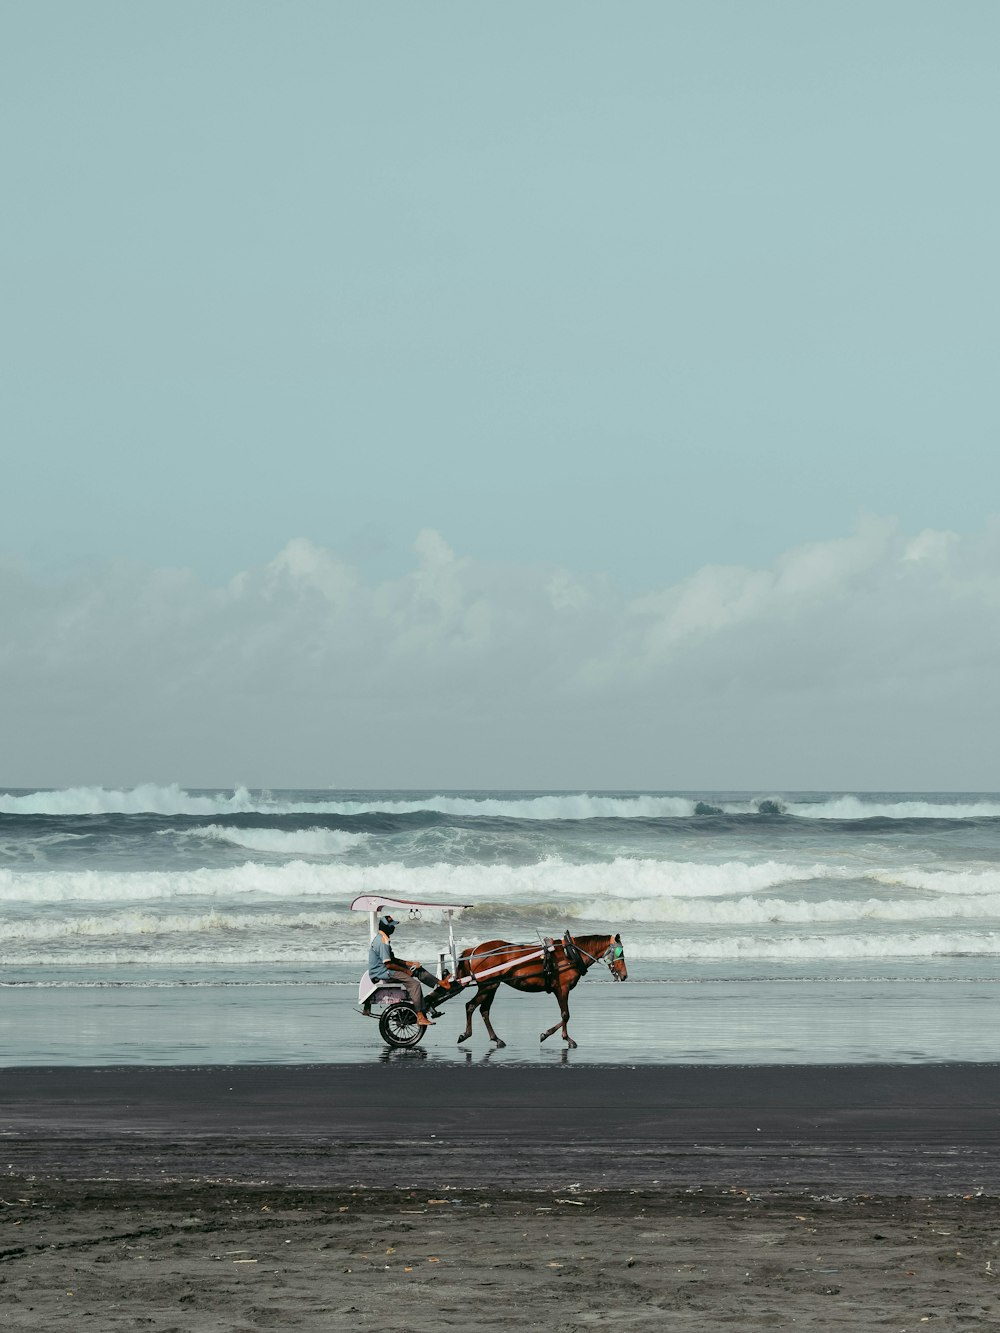 2 brown horses running on beach during daytime